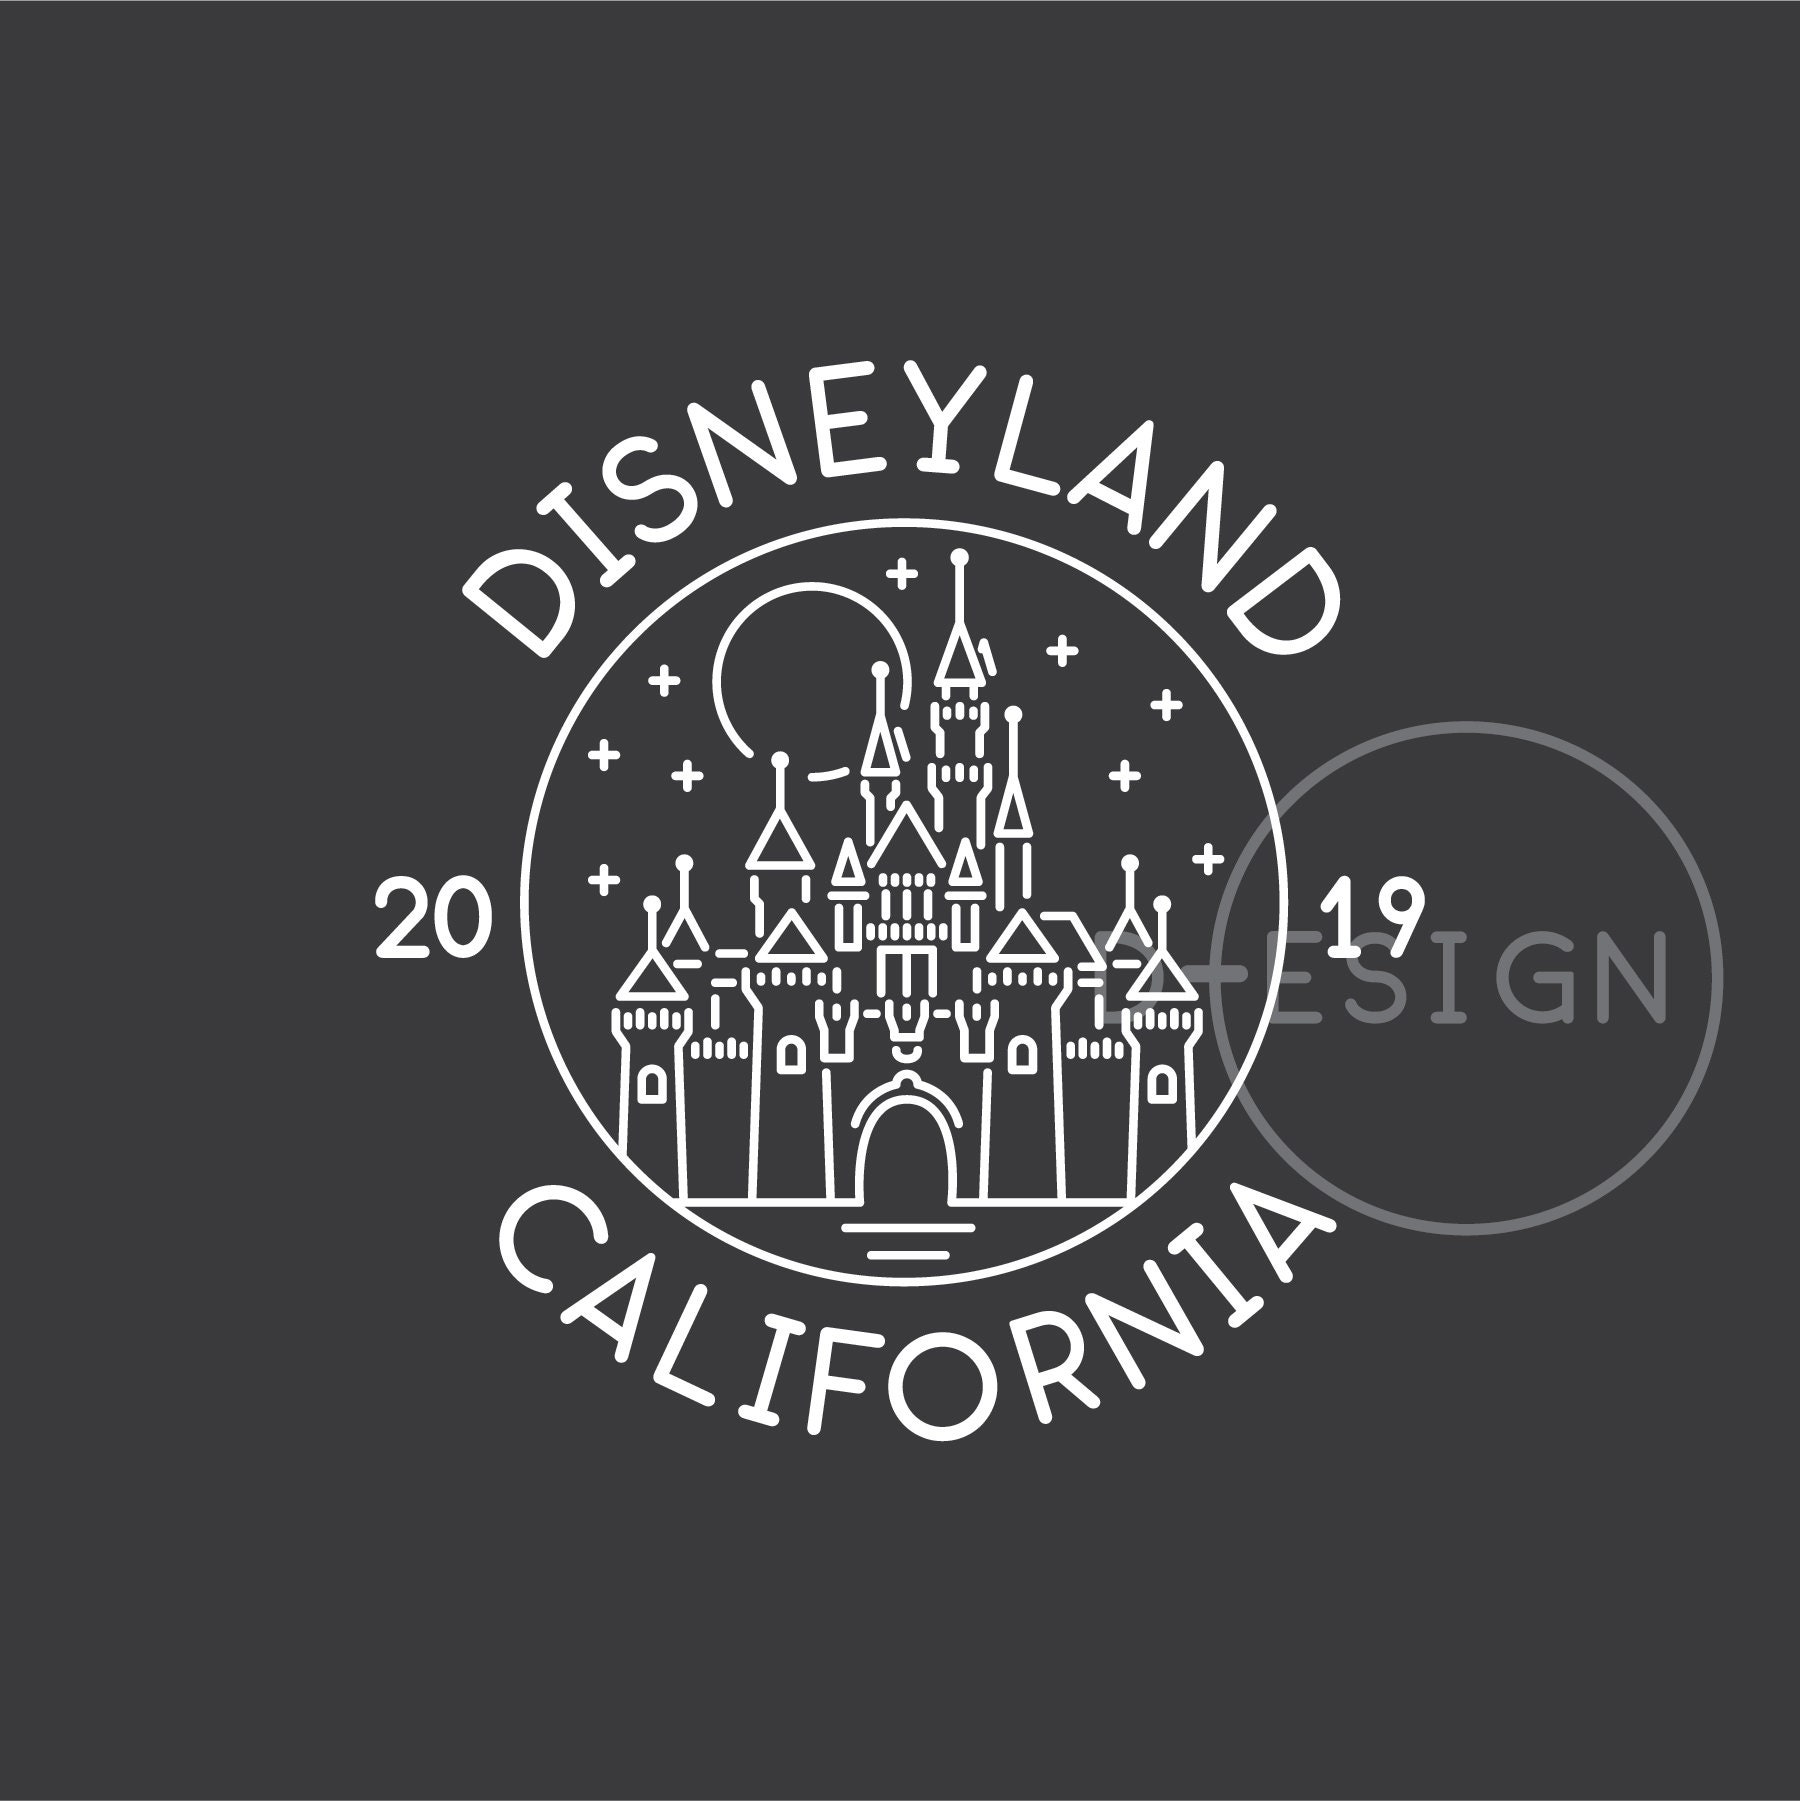 Disneyland Sign SVG